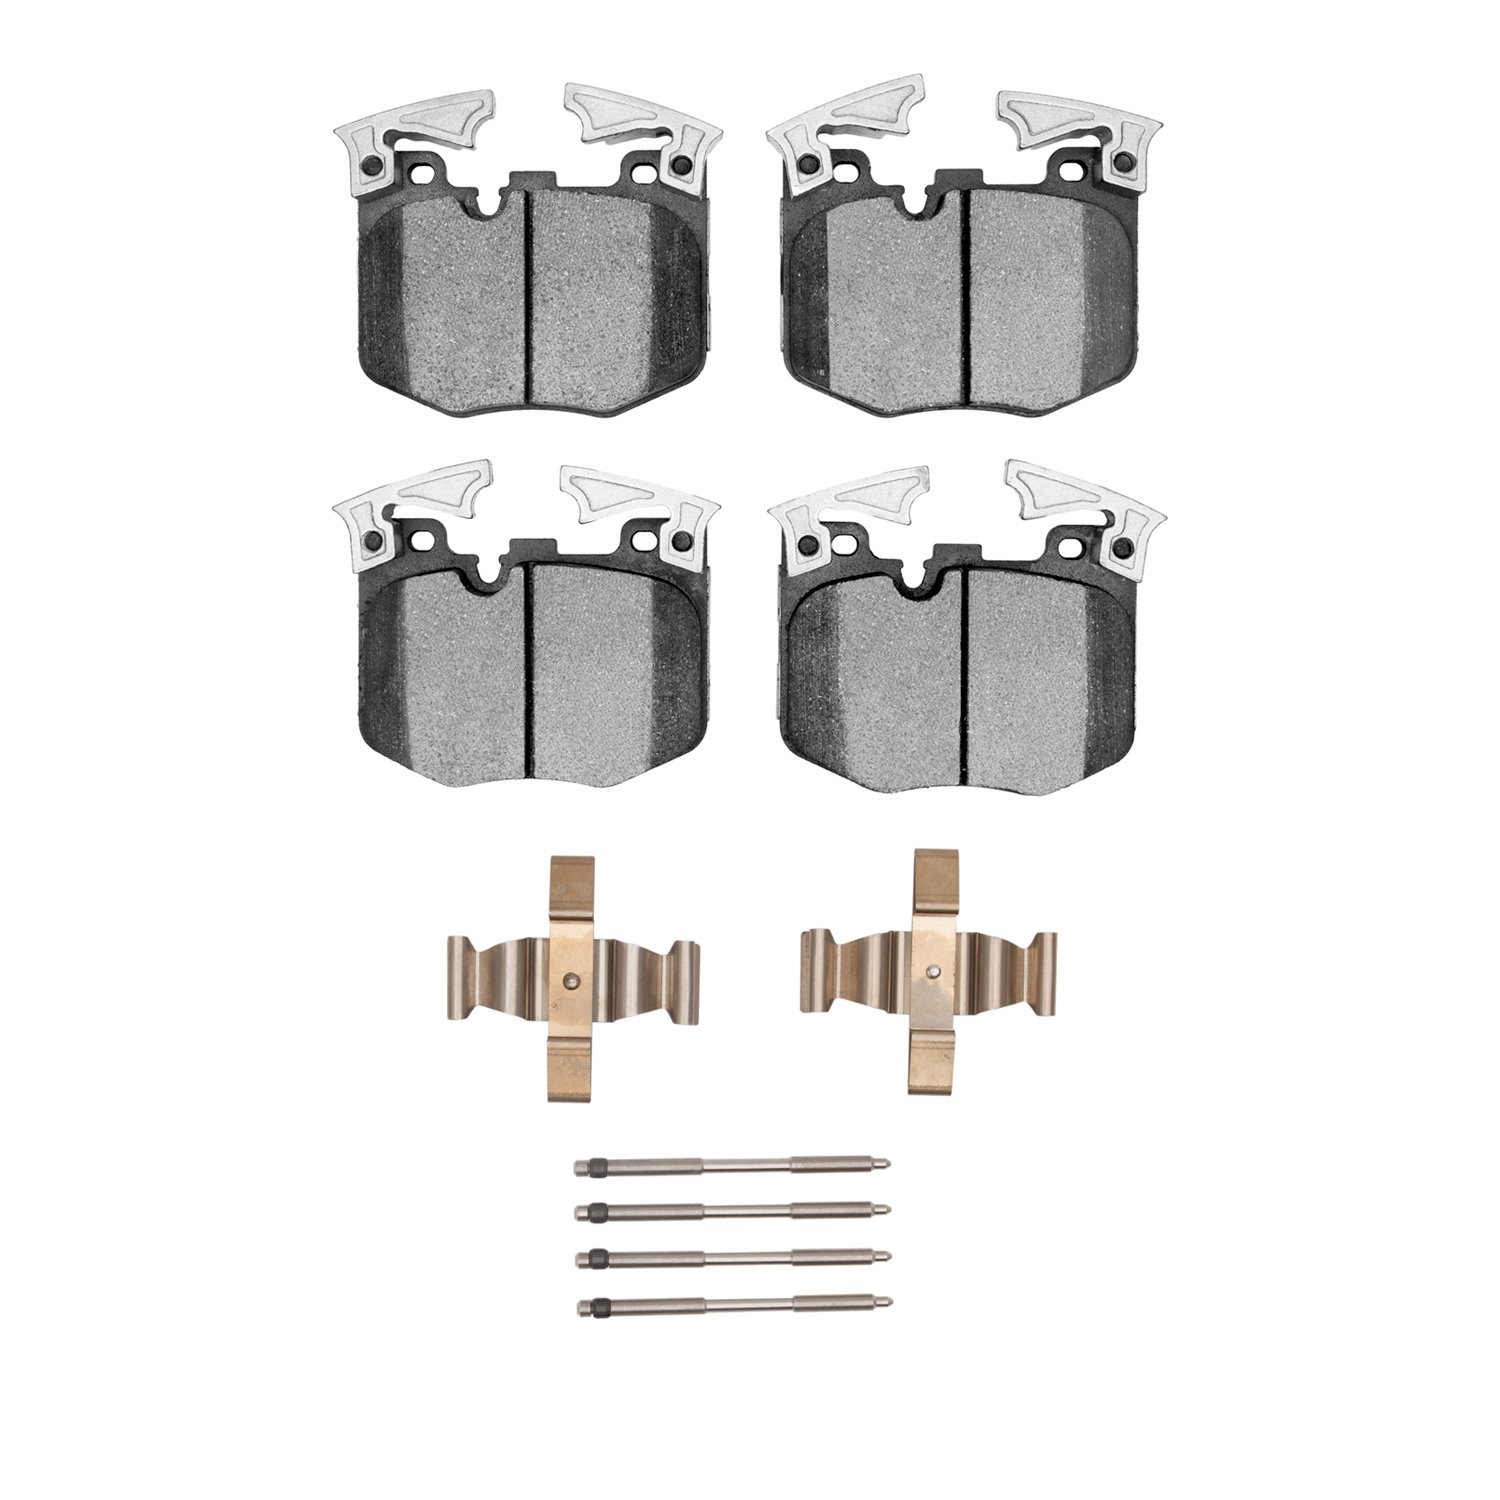 1310-1867-01 3000-Series Ceramic Brake Pads & Hardware Kit, Fits Select Multiple Makes/Models, Position: Front